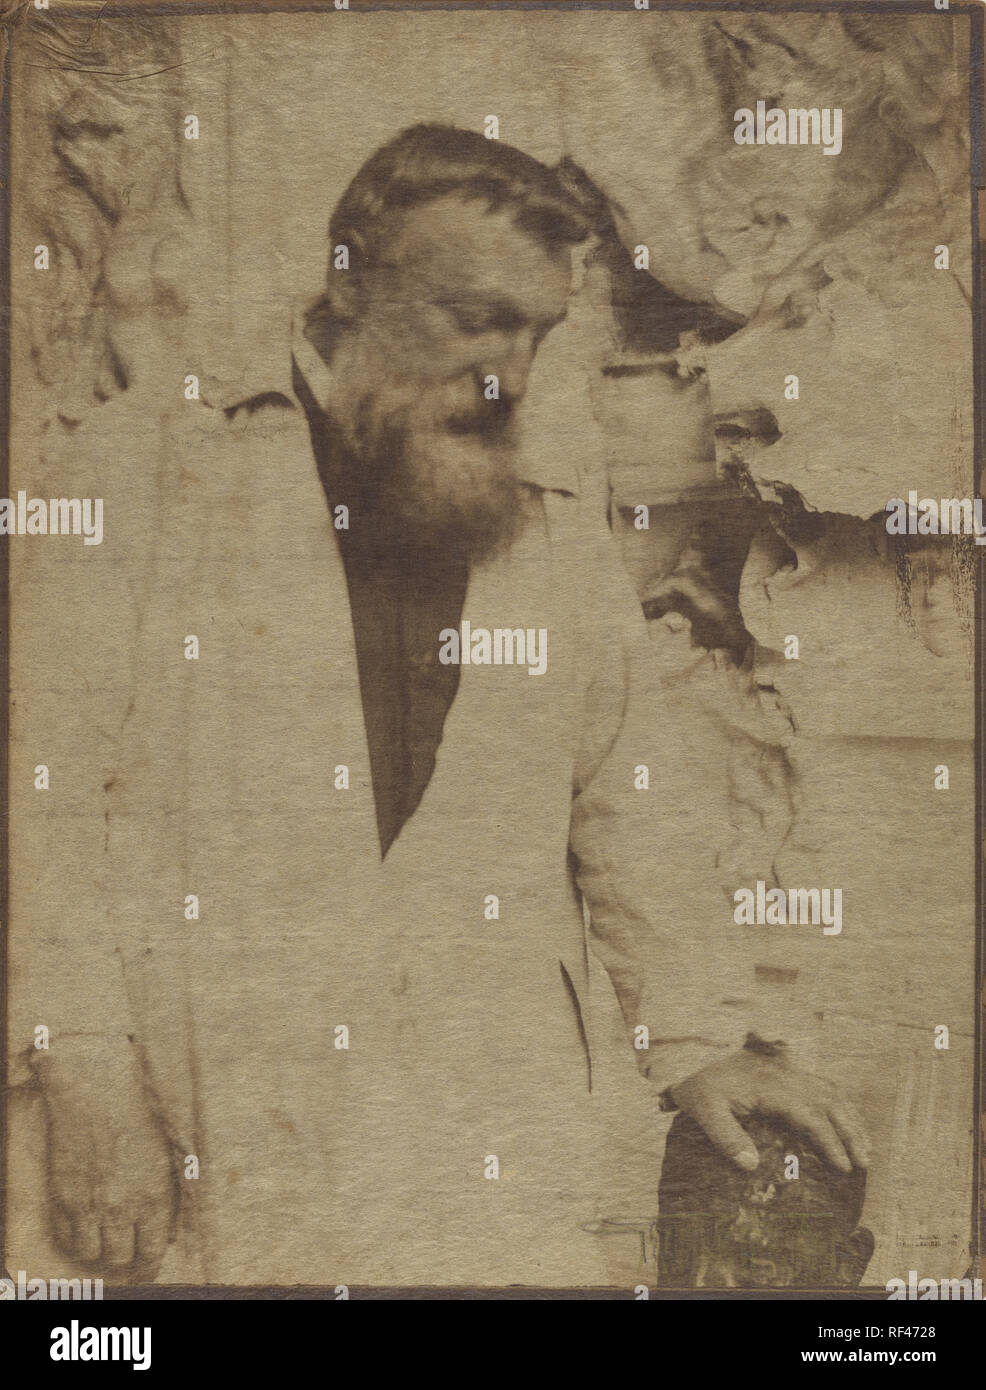 Auguste Rodin] ; Gertrude Käsebier (américain, 1852 - 1934) ; Paris, France  ; 1905 ; platine imprimer ; 33,8 x 25,6 cm (13 x 10 5/16 1/16 in.) ;  87.XM.59,41 Photo Stock - Alamy